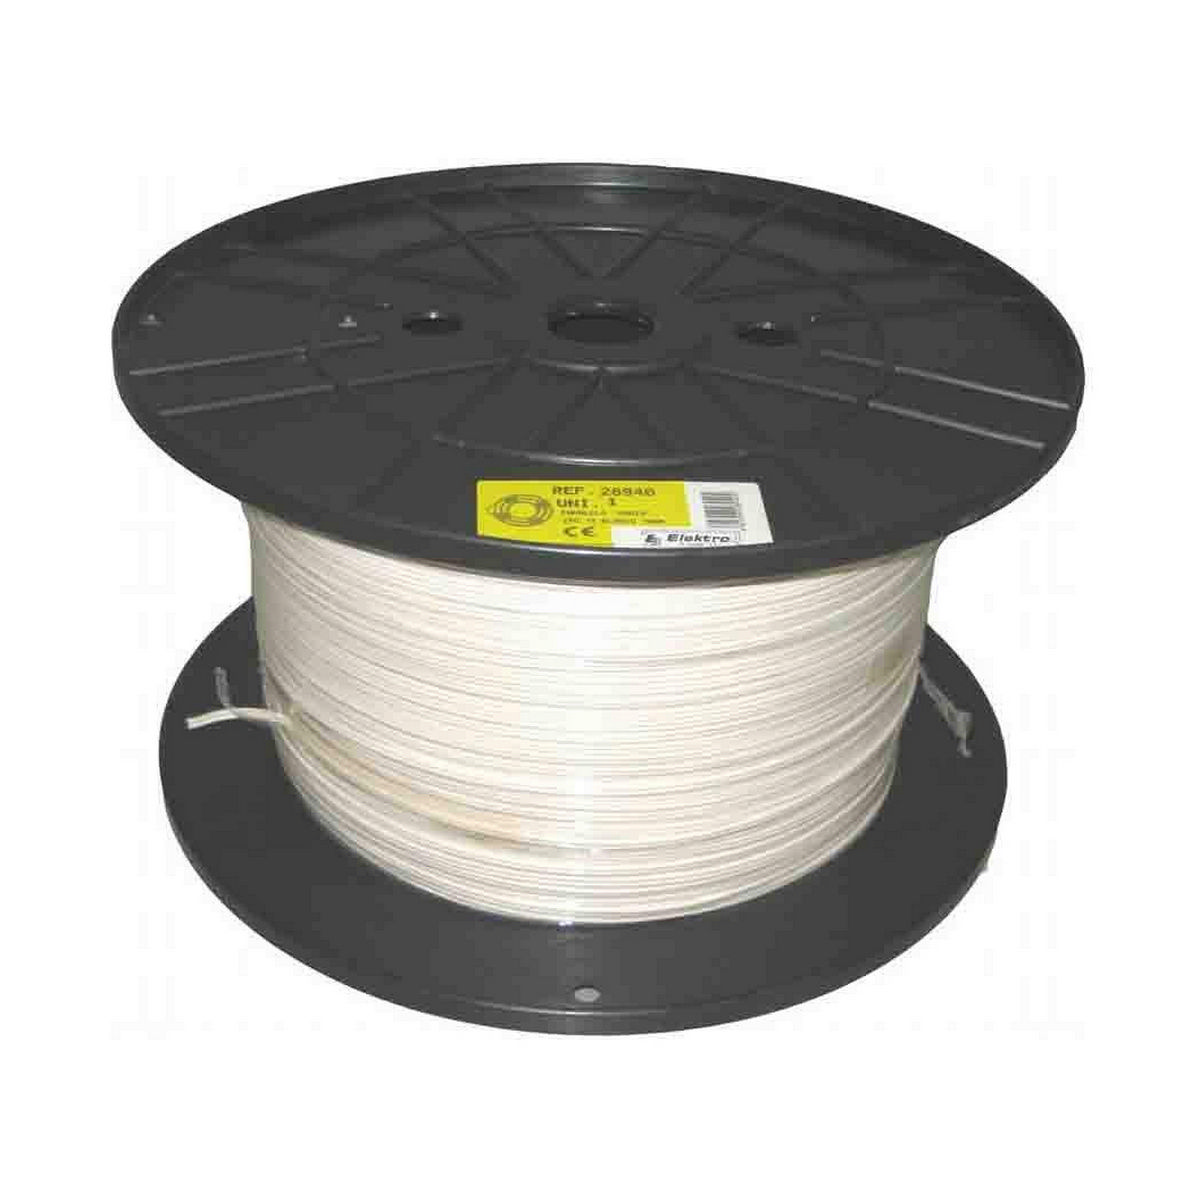 Kabel Sediles 3 x 1,5 mm Hvid Ø 400 x 200 mm